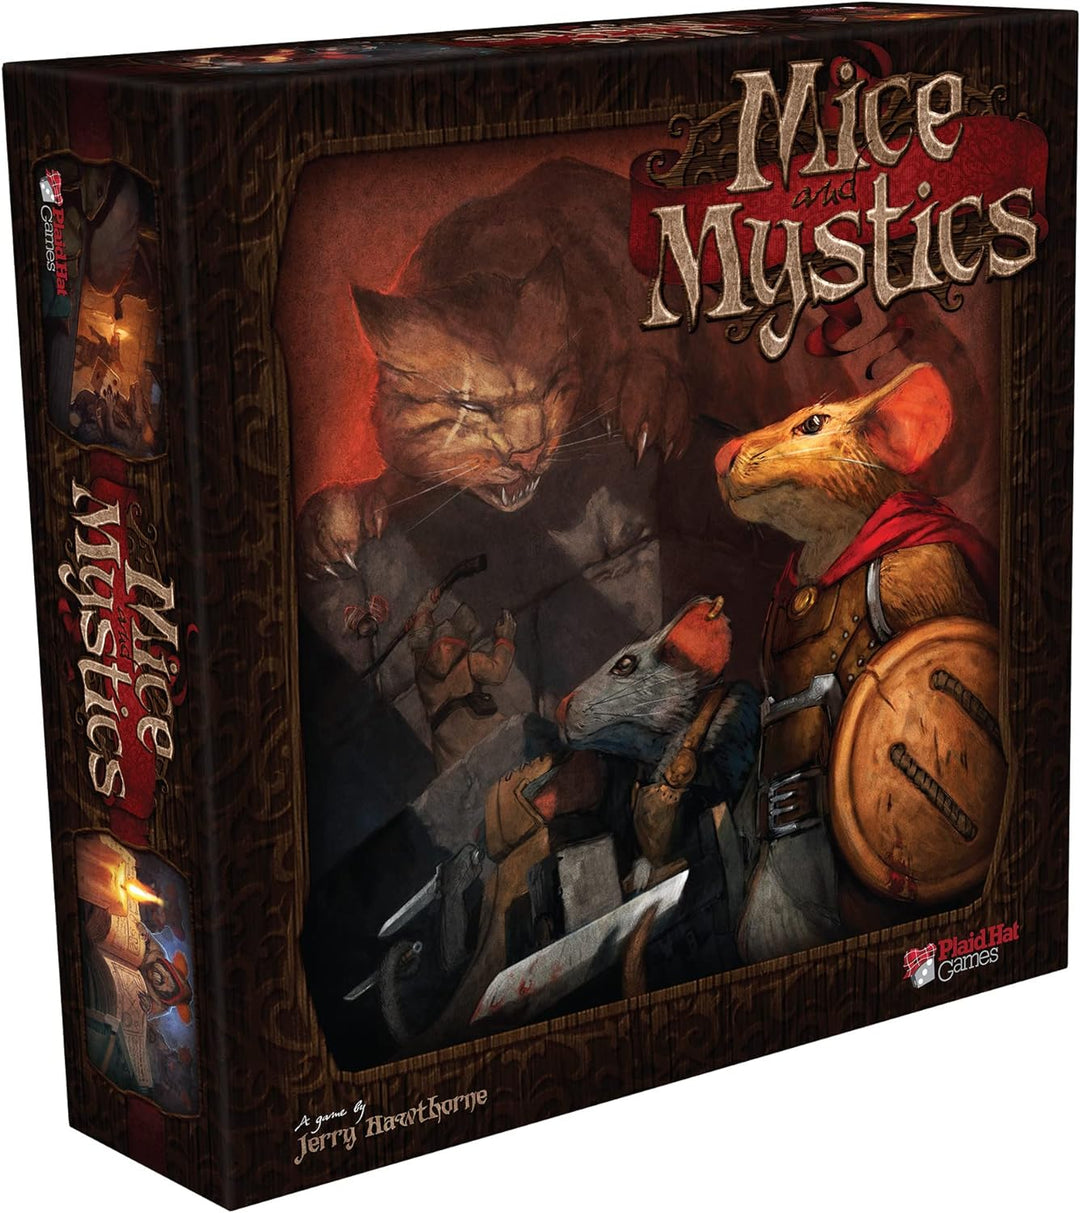 Mice and Mystics Board Game